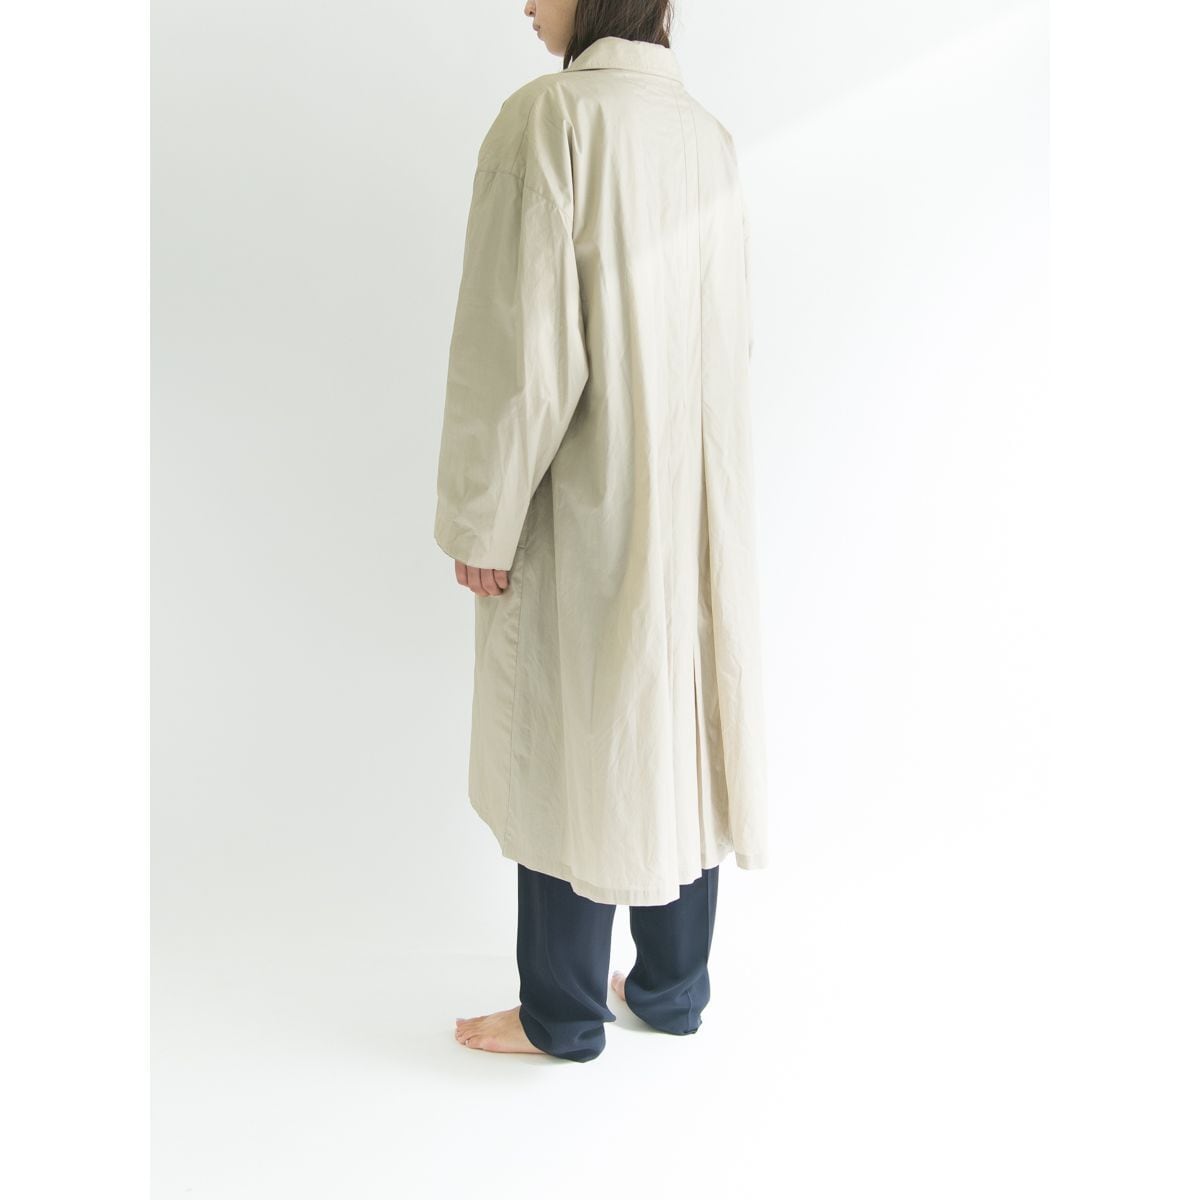 made in france long length shirt coat